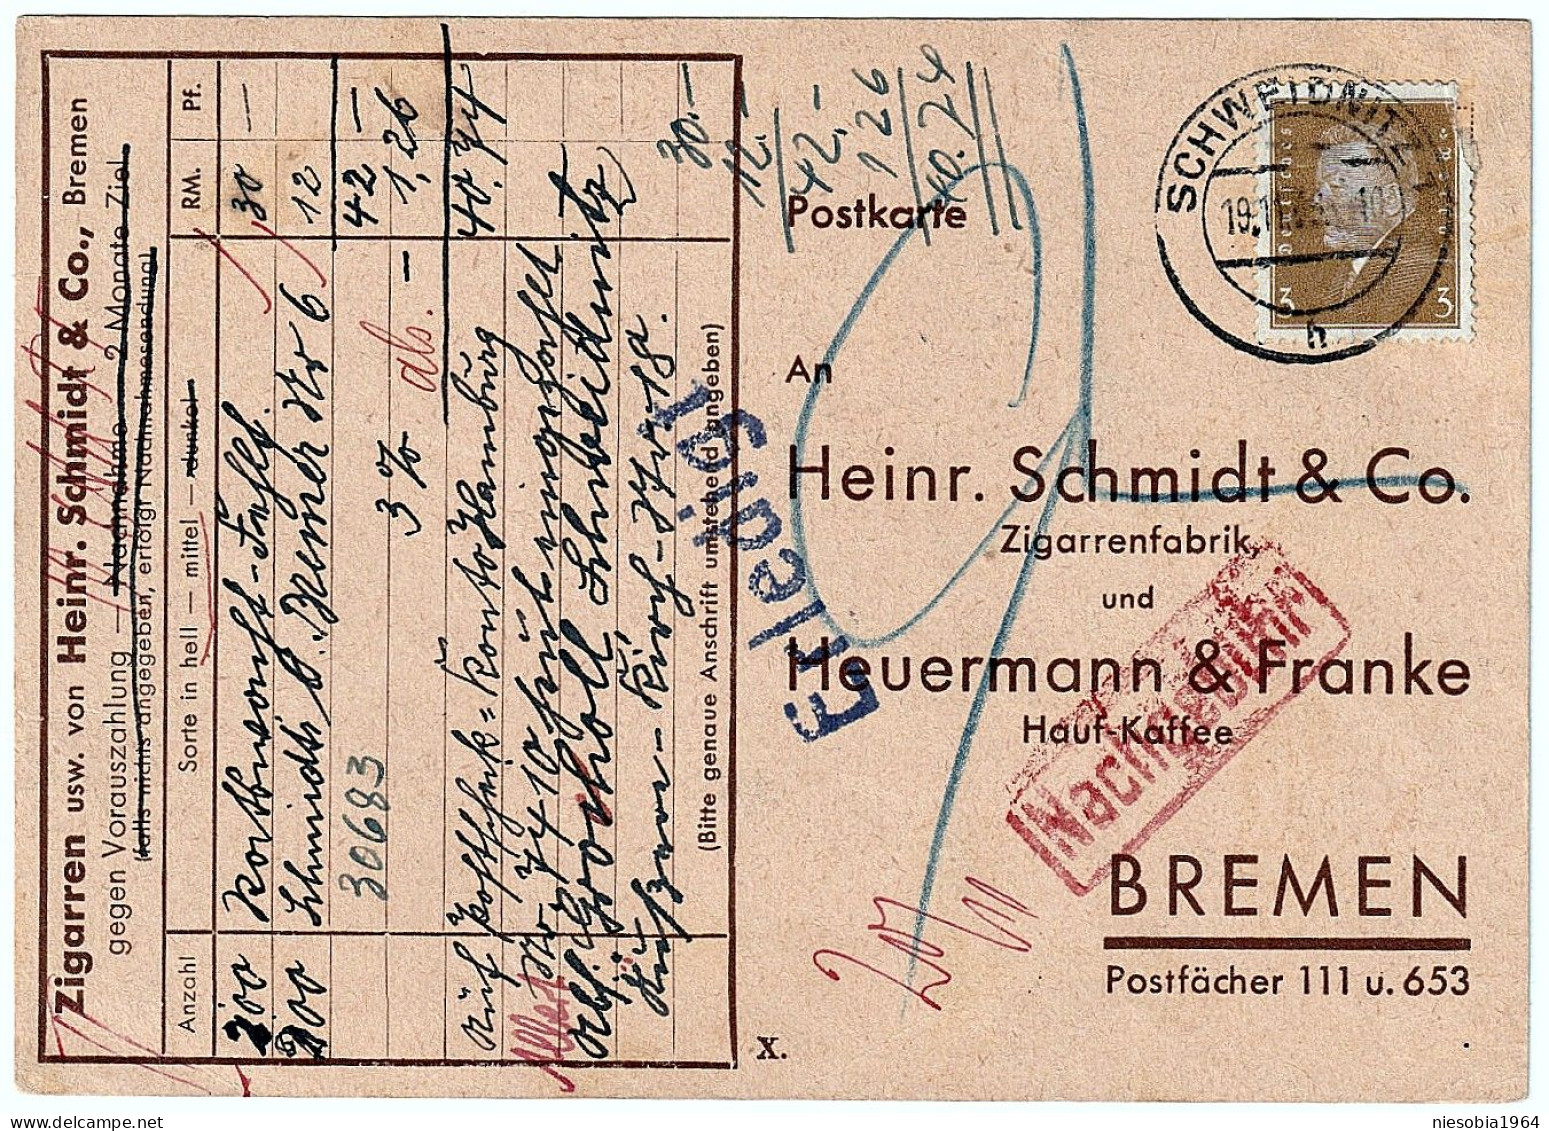 Company Postcard Heinr. Schmidt & Co.Cigar Factory And Heurenmann & Franke Hauf-Kaffe BREMEN Seal SCHWEIDNITZ 19/11/1938 - Postkarten